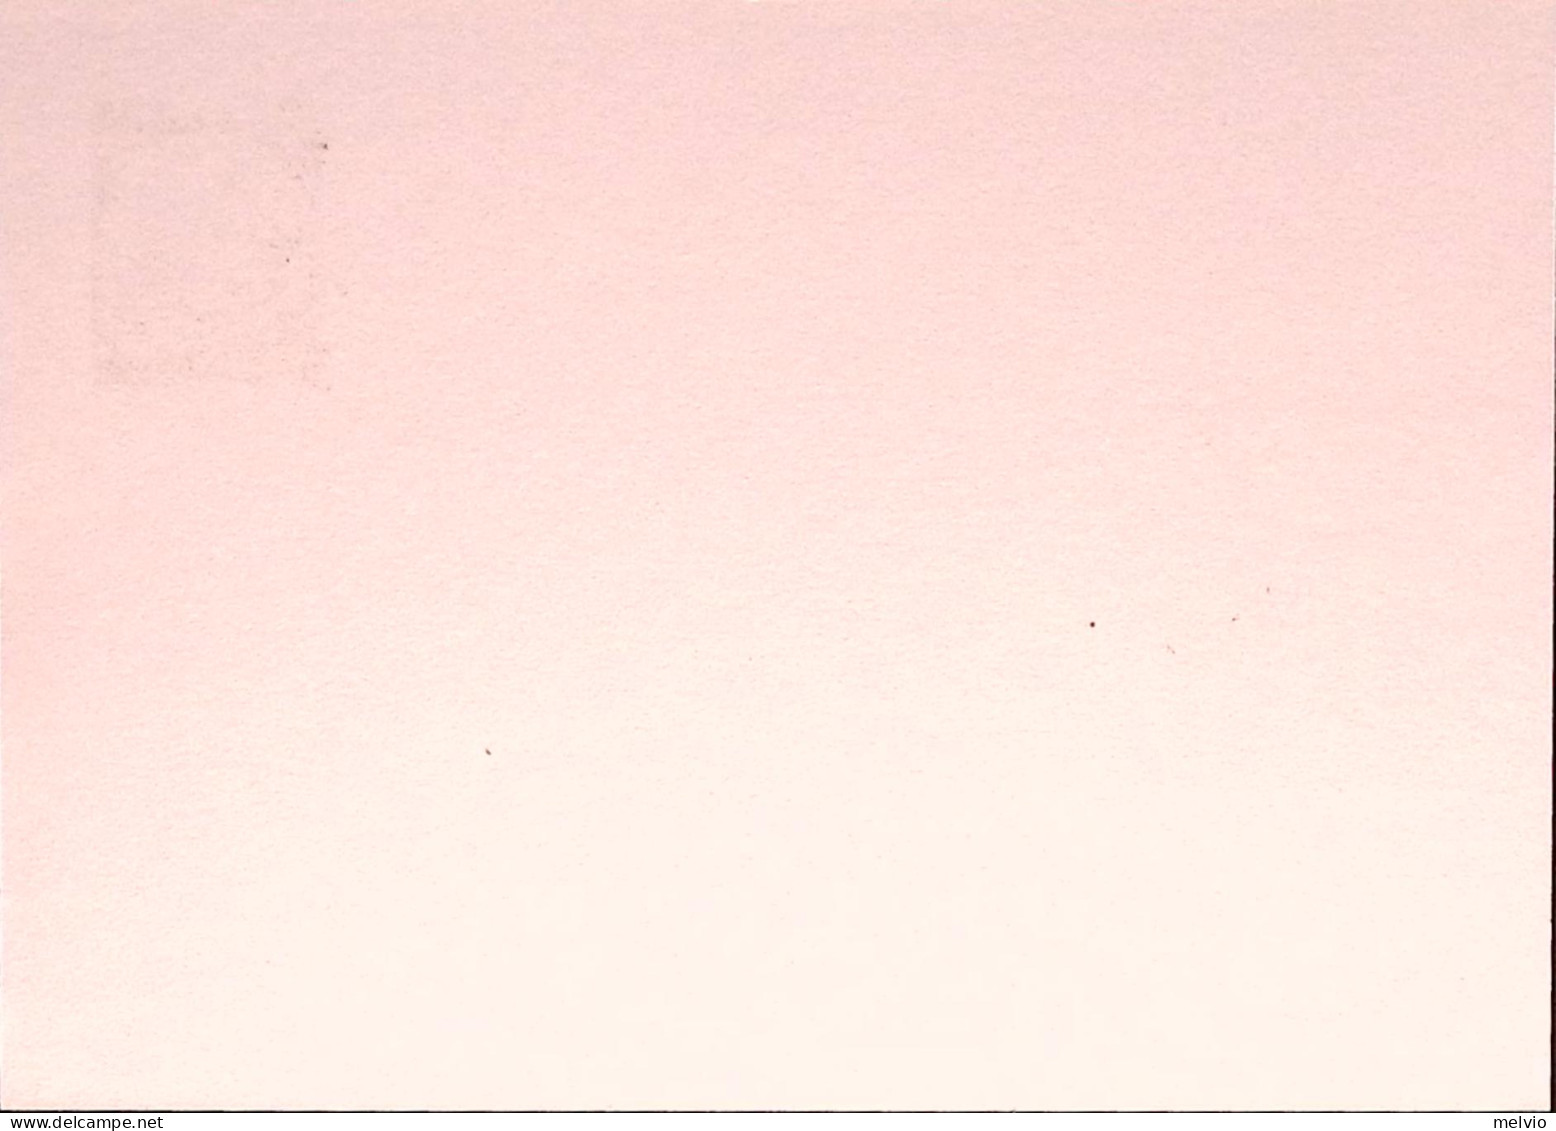 1997-VIAREGGIO Cartolina Postale IPZS Lire 750 Ann Spec - Entiers Postaux